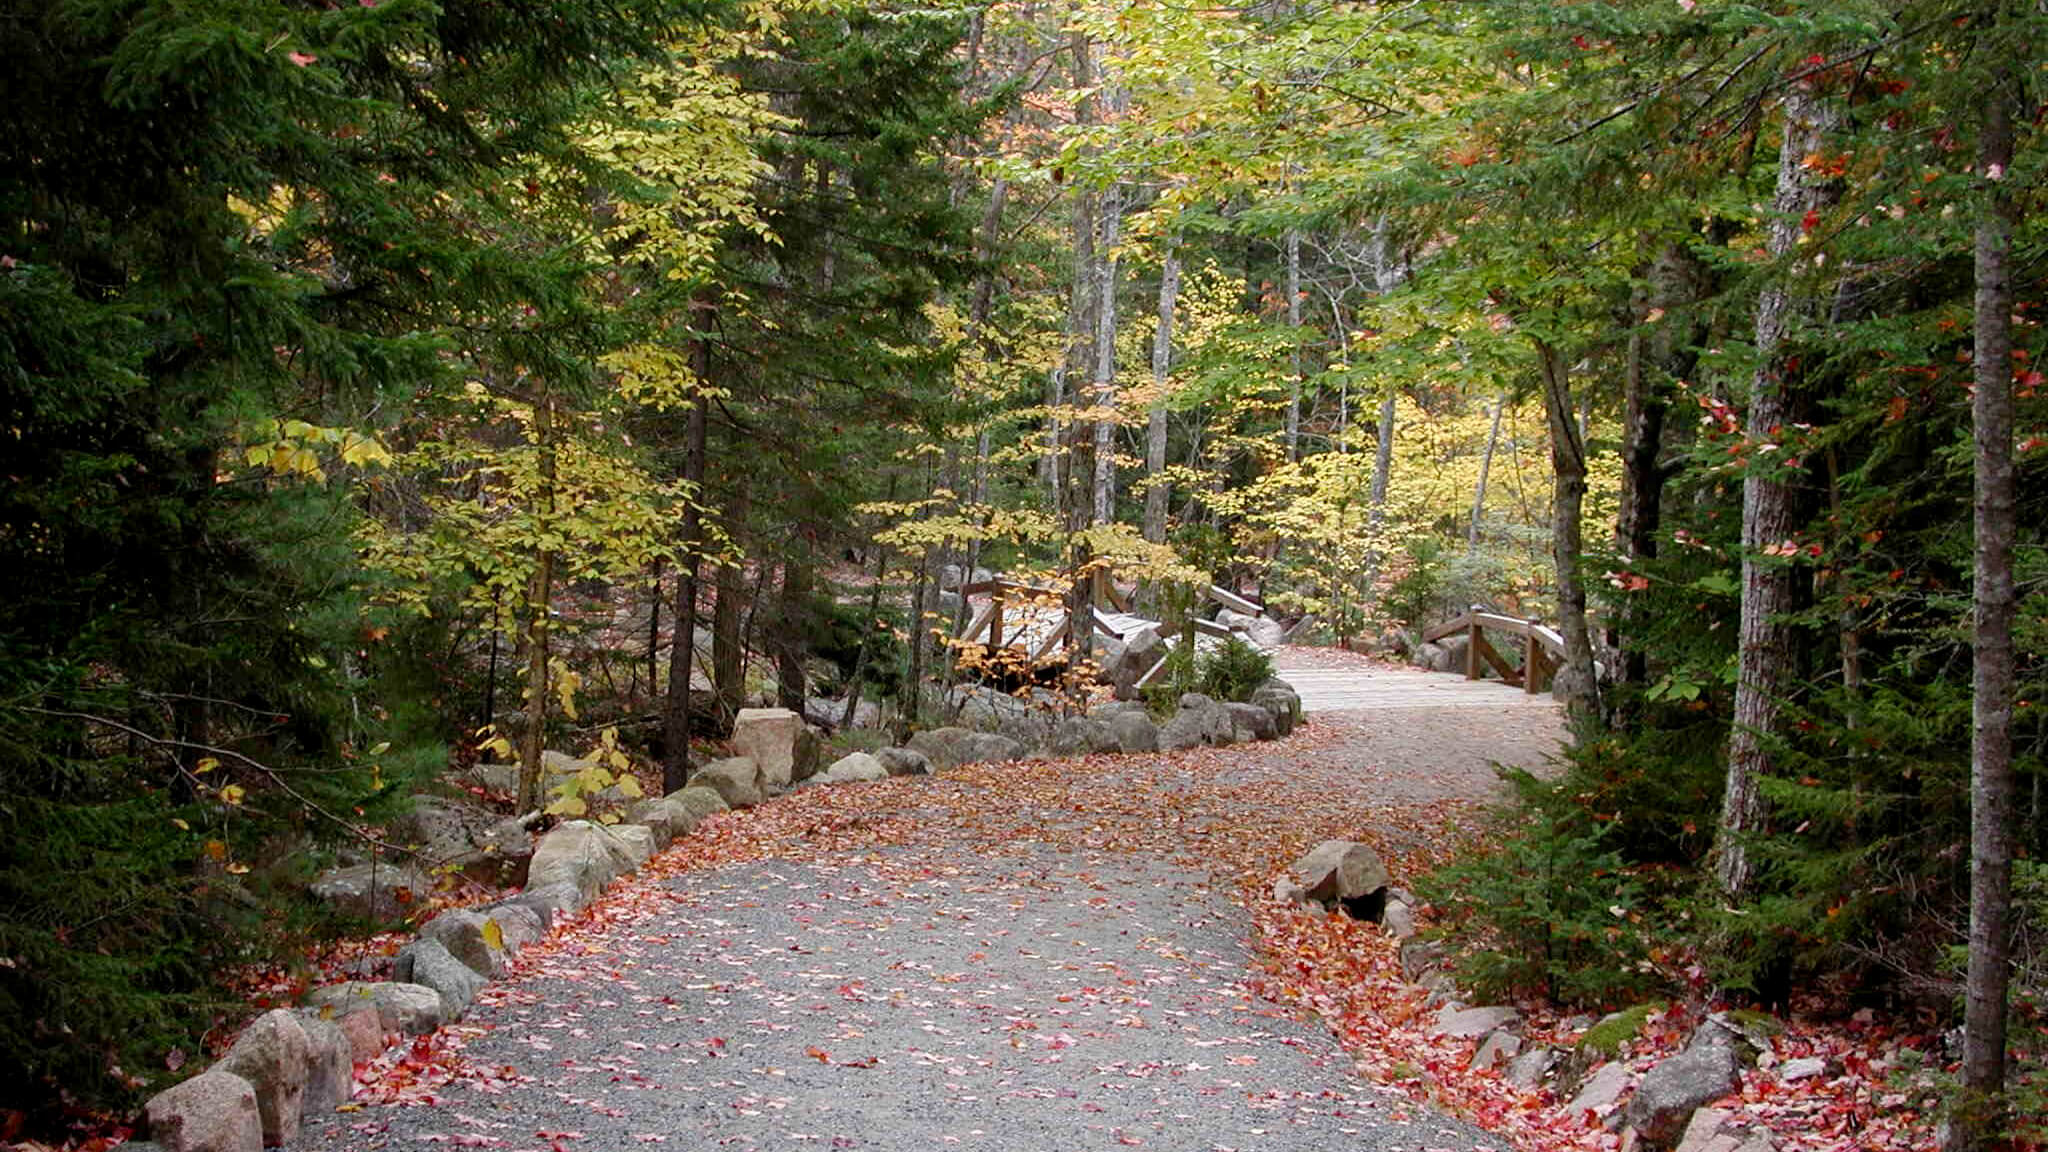 Autumn on Acadia National Park's bike trail